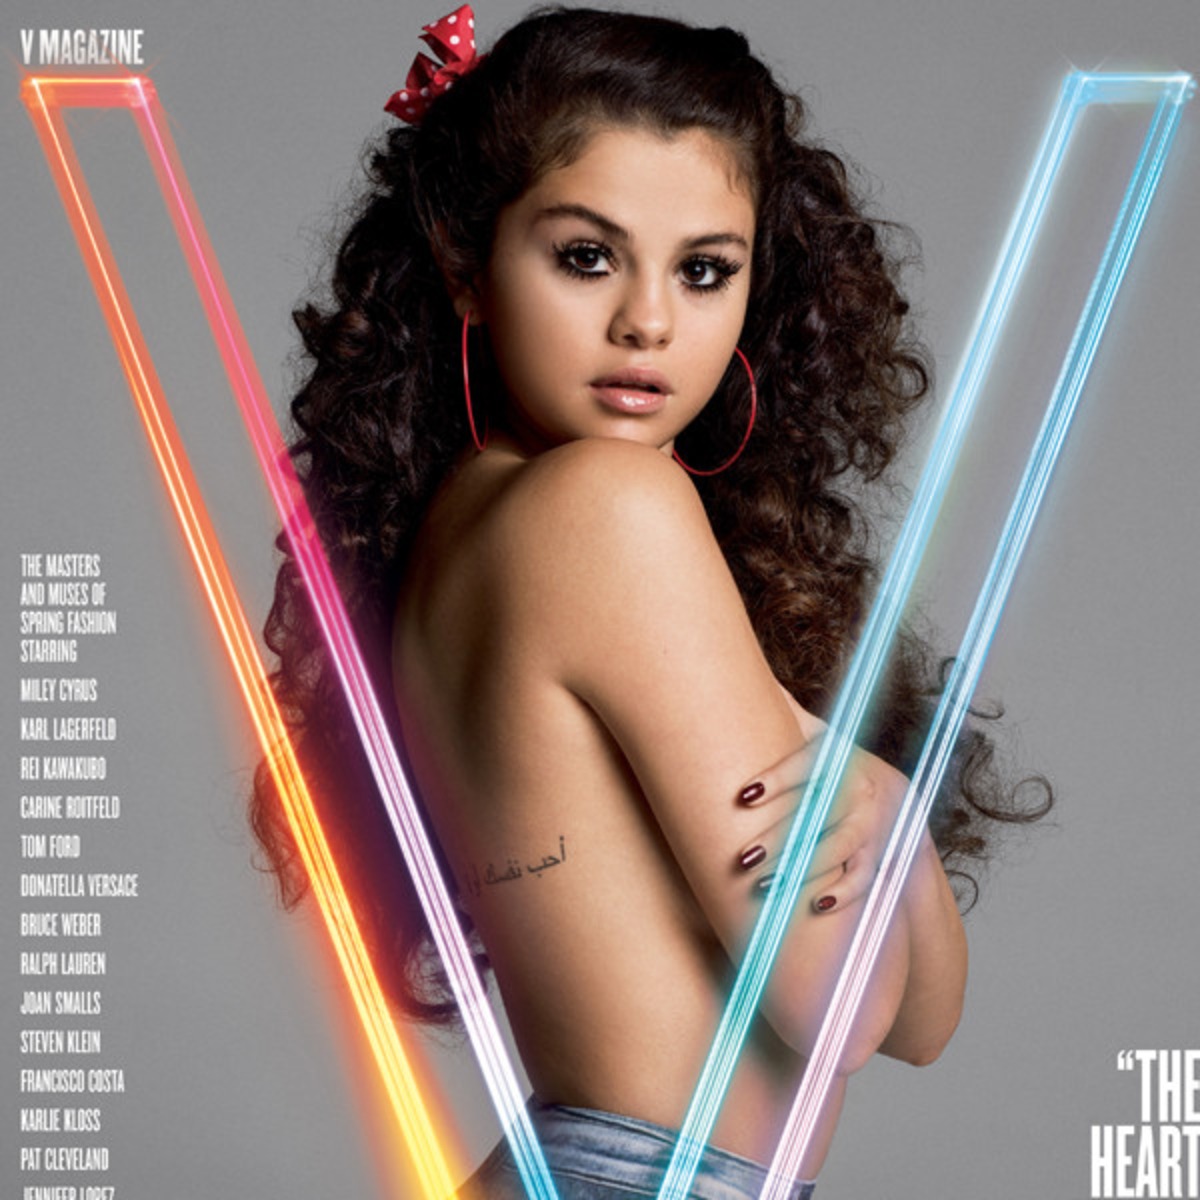 Selena Gomez 3D Model HQ Remastered by vindude79 on DeviantArt